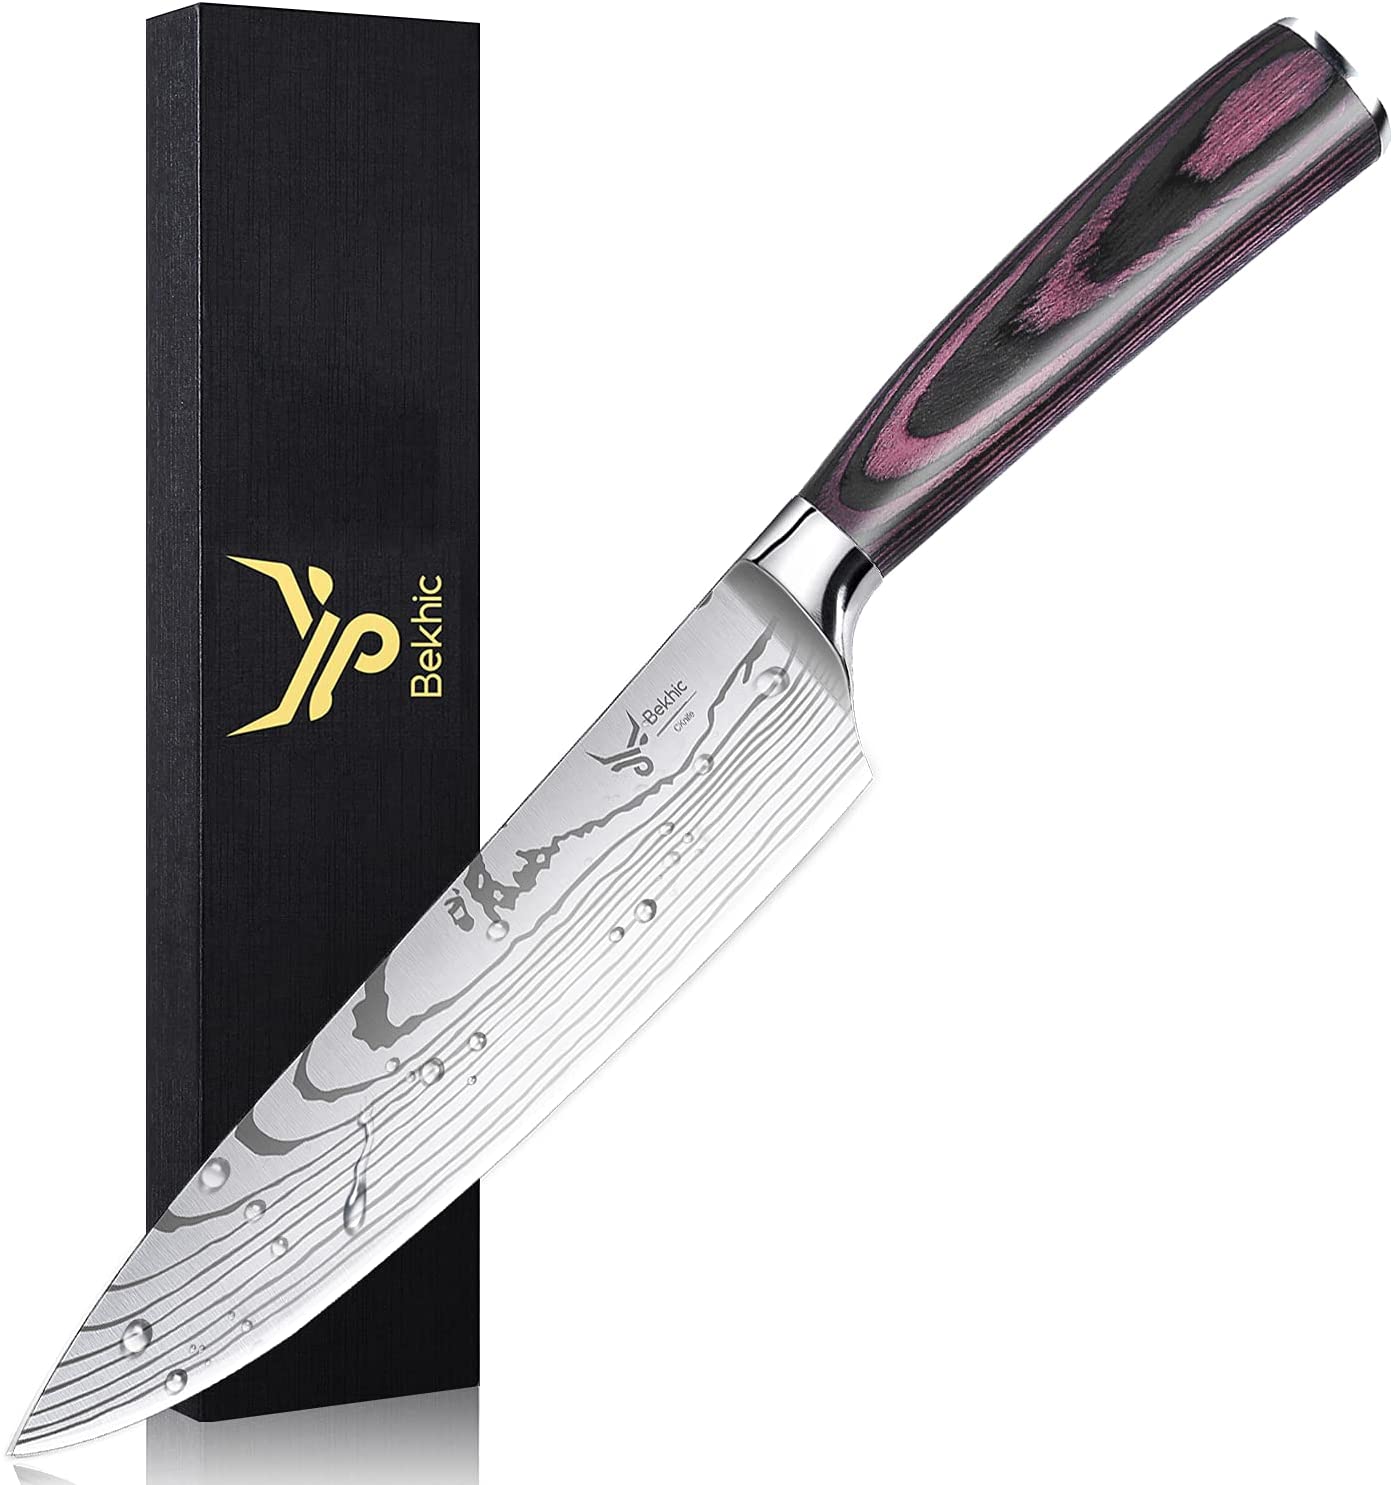 Bekhic Chef Knife – CKnife Pro Kitchen Knife 8-Inch – Just $23.99 at Amazon